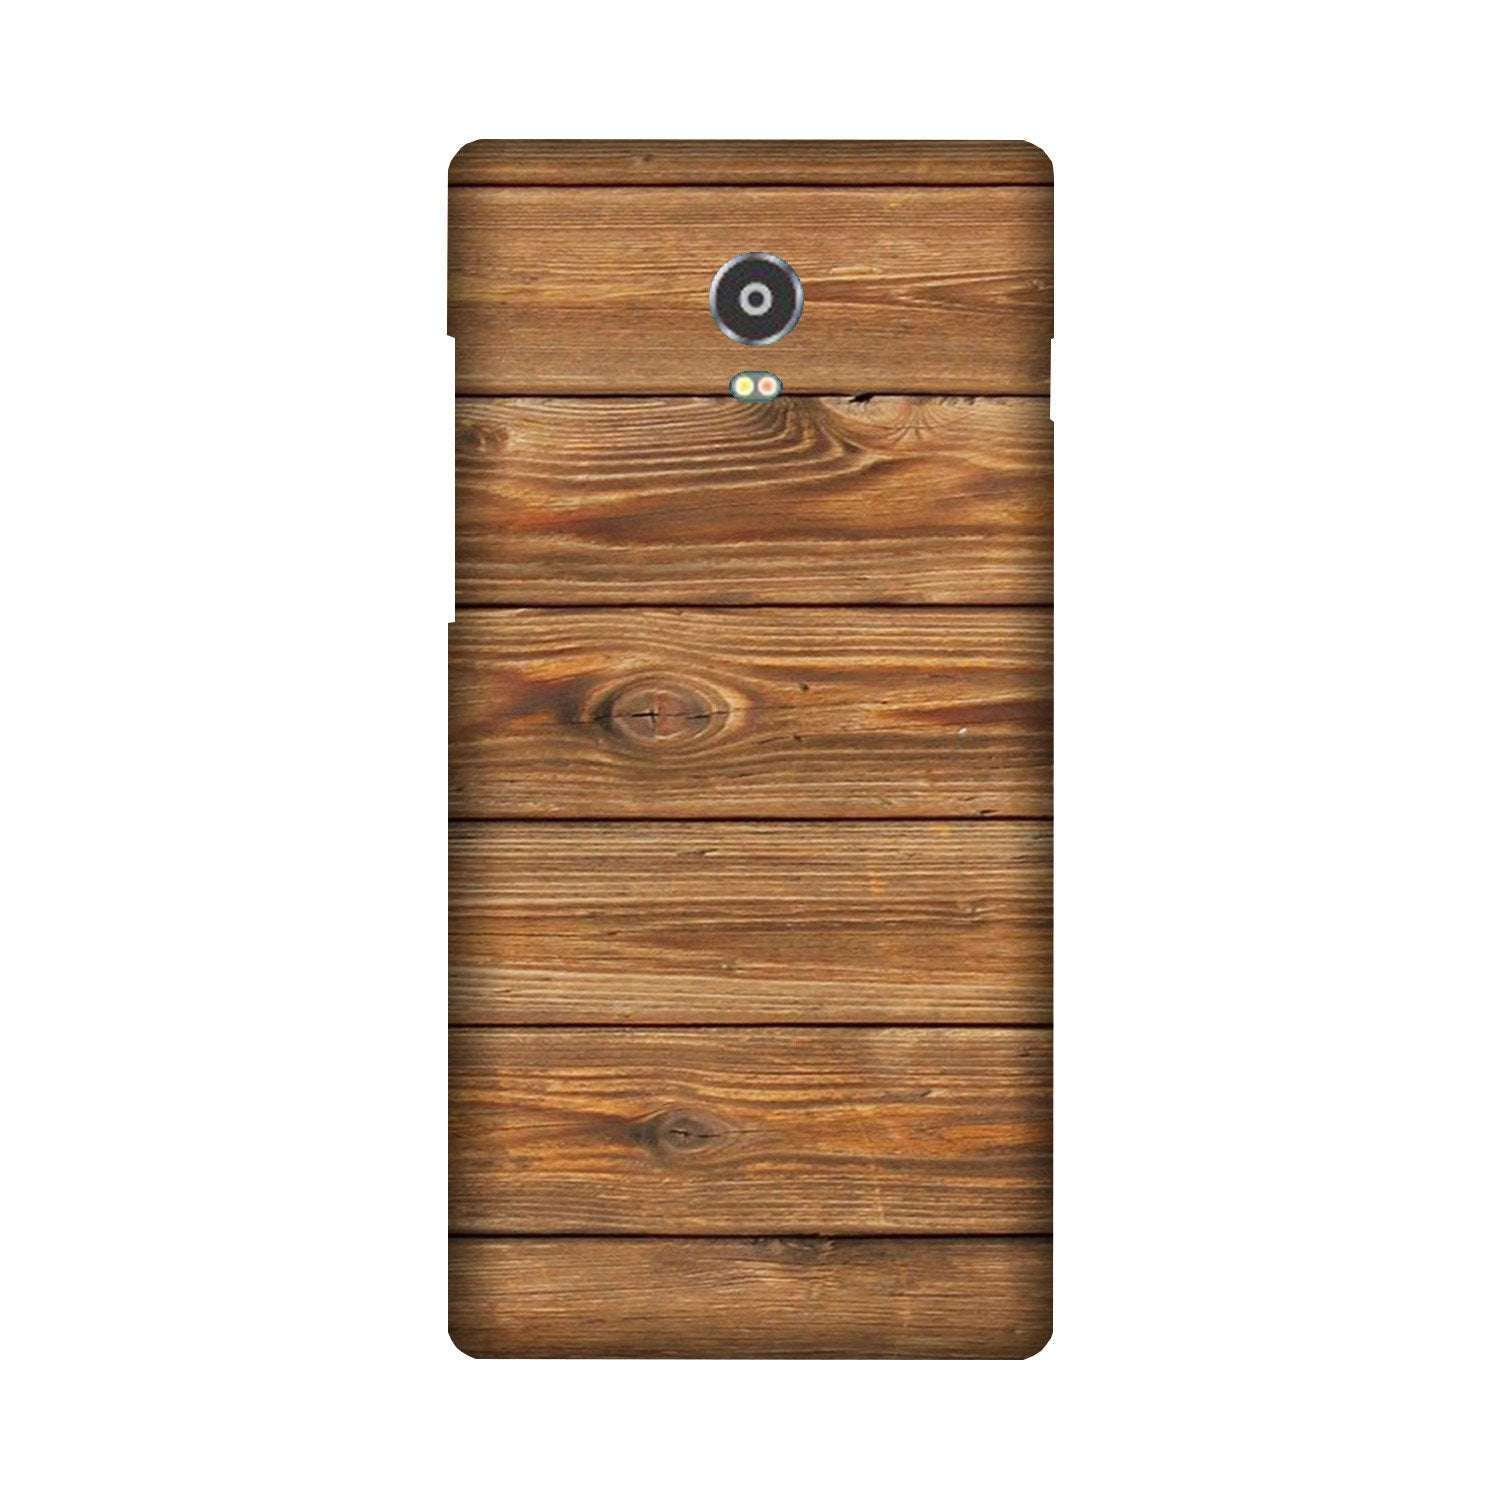 Wooden Look Case for Lenovo Vibe P1(Design - 113)